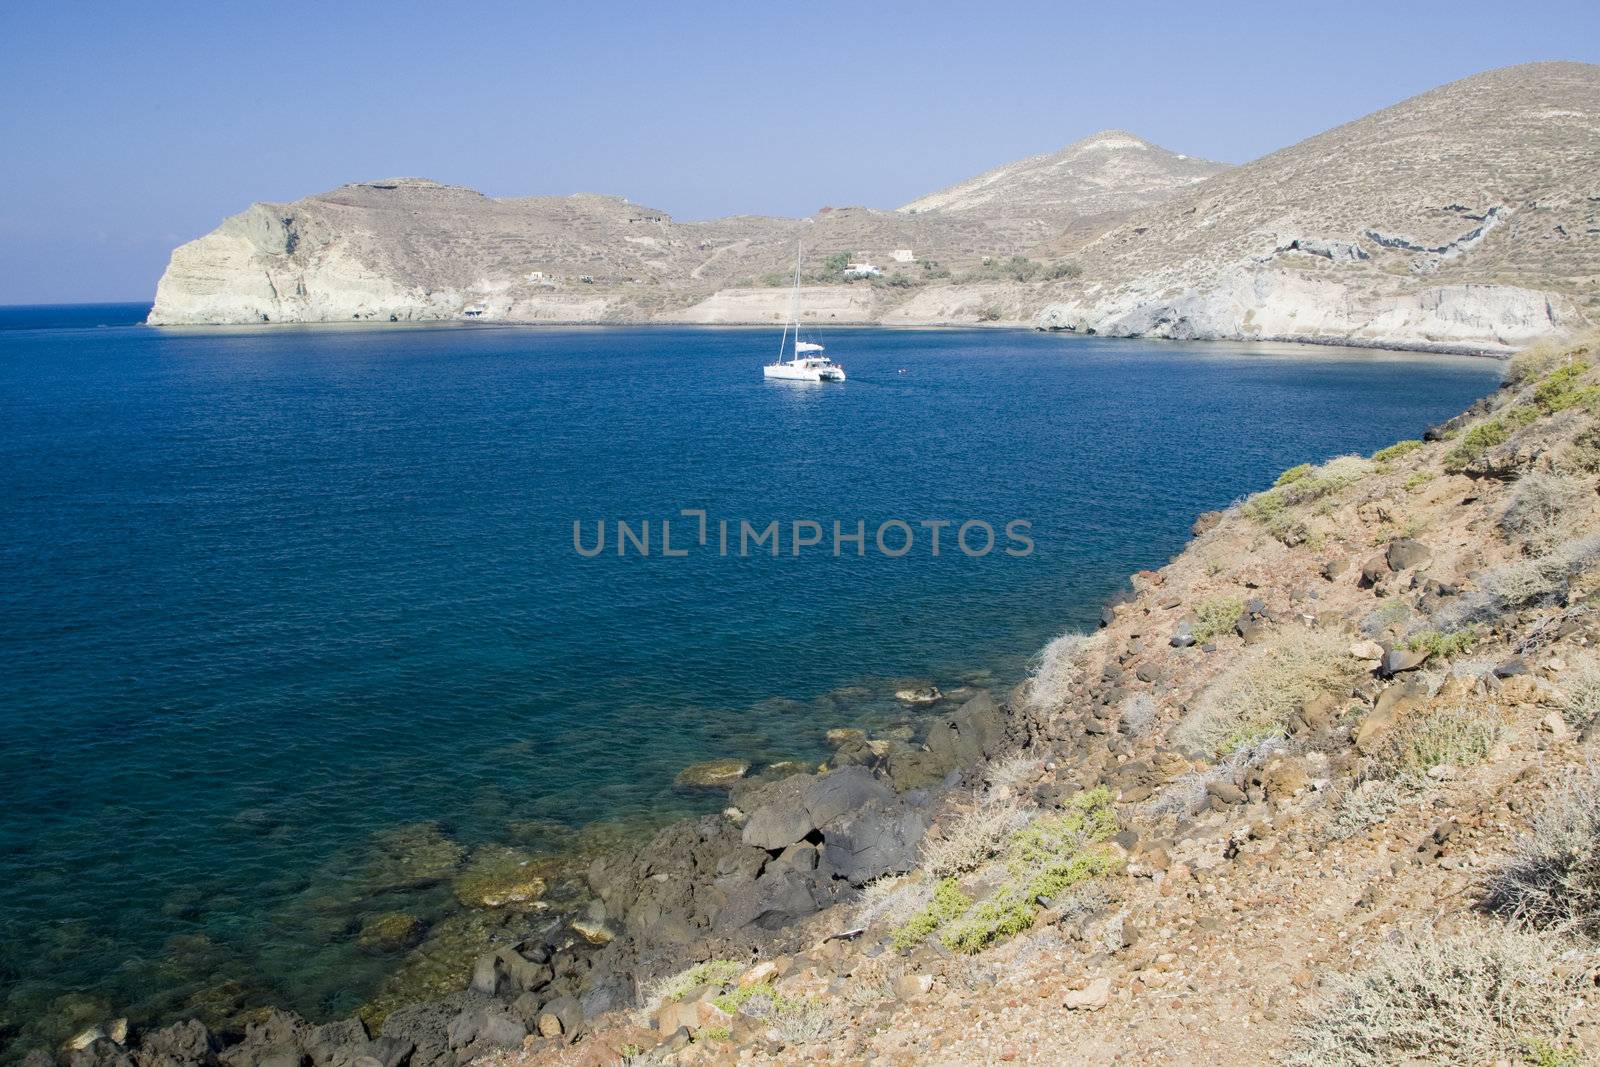 Santorini Island - summer holiday destination in Greece